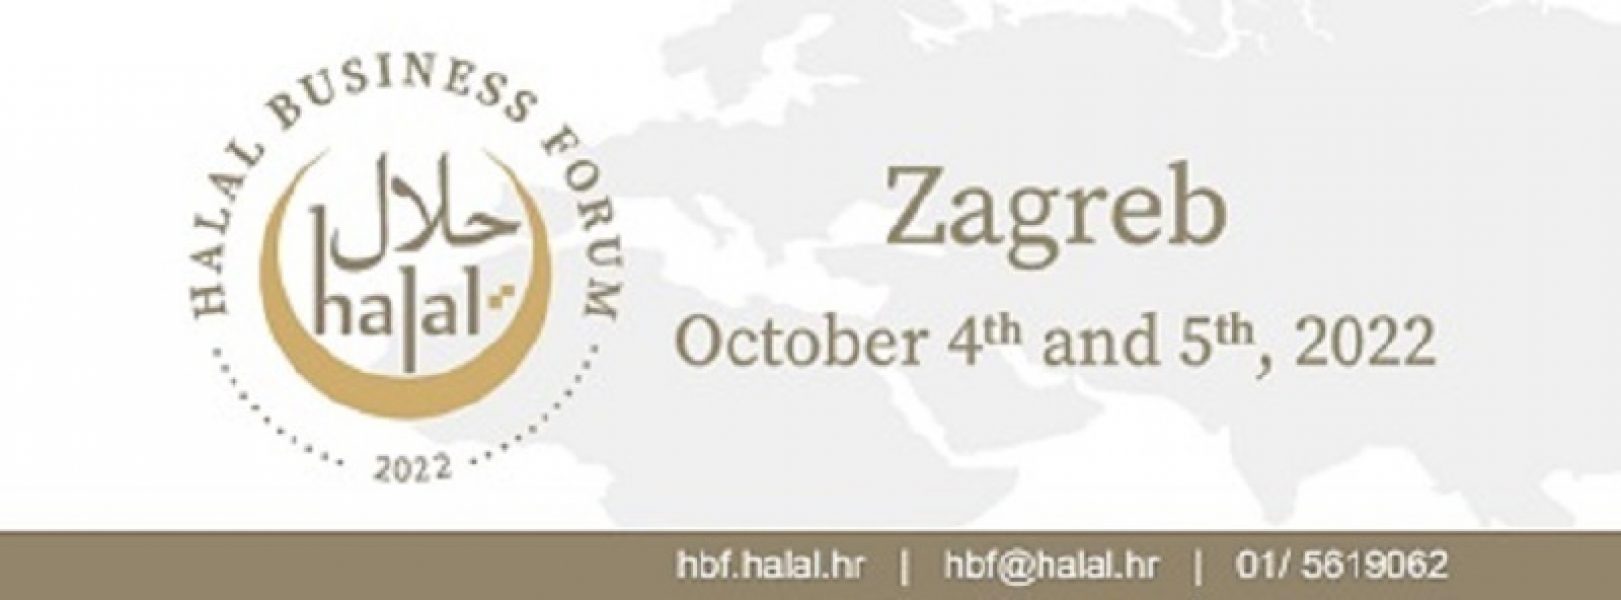 Halal Business Forum 4. i 5. oktobra u Zagrebu_6310090396b73.jpeg